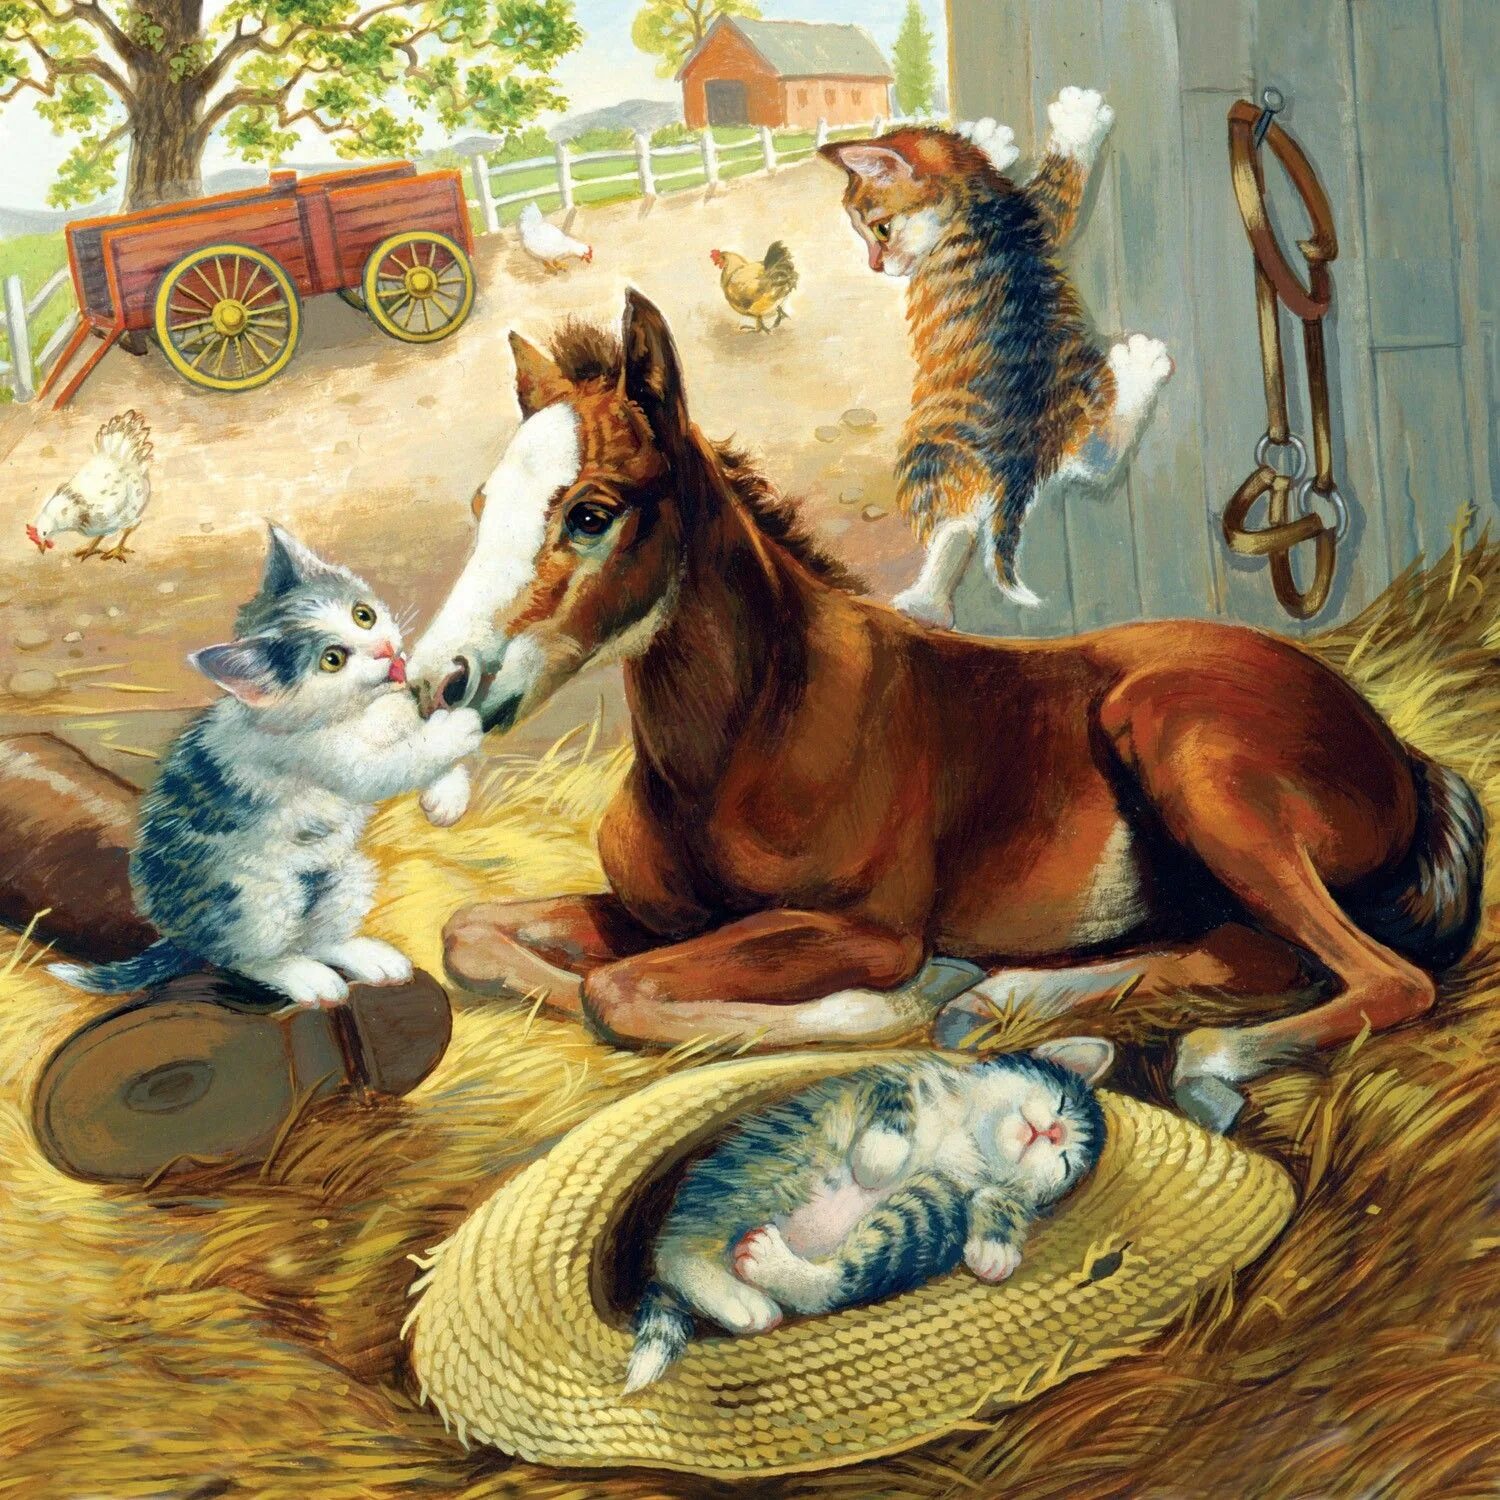 Лошадь и кошка арт. Картина кошки и собаки. Картины с животными в стиле ретро. Чихуахуа и лошадь.